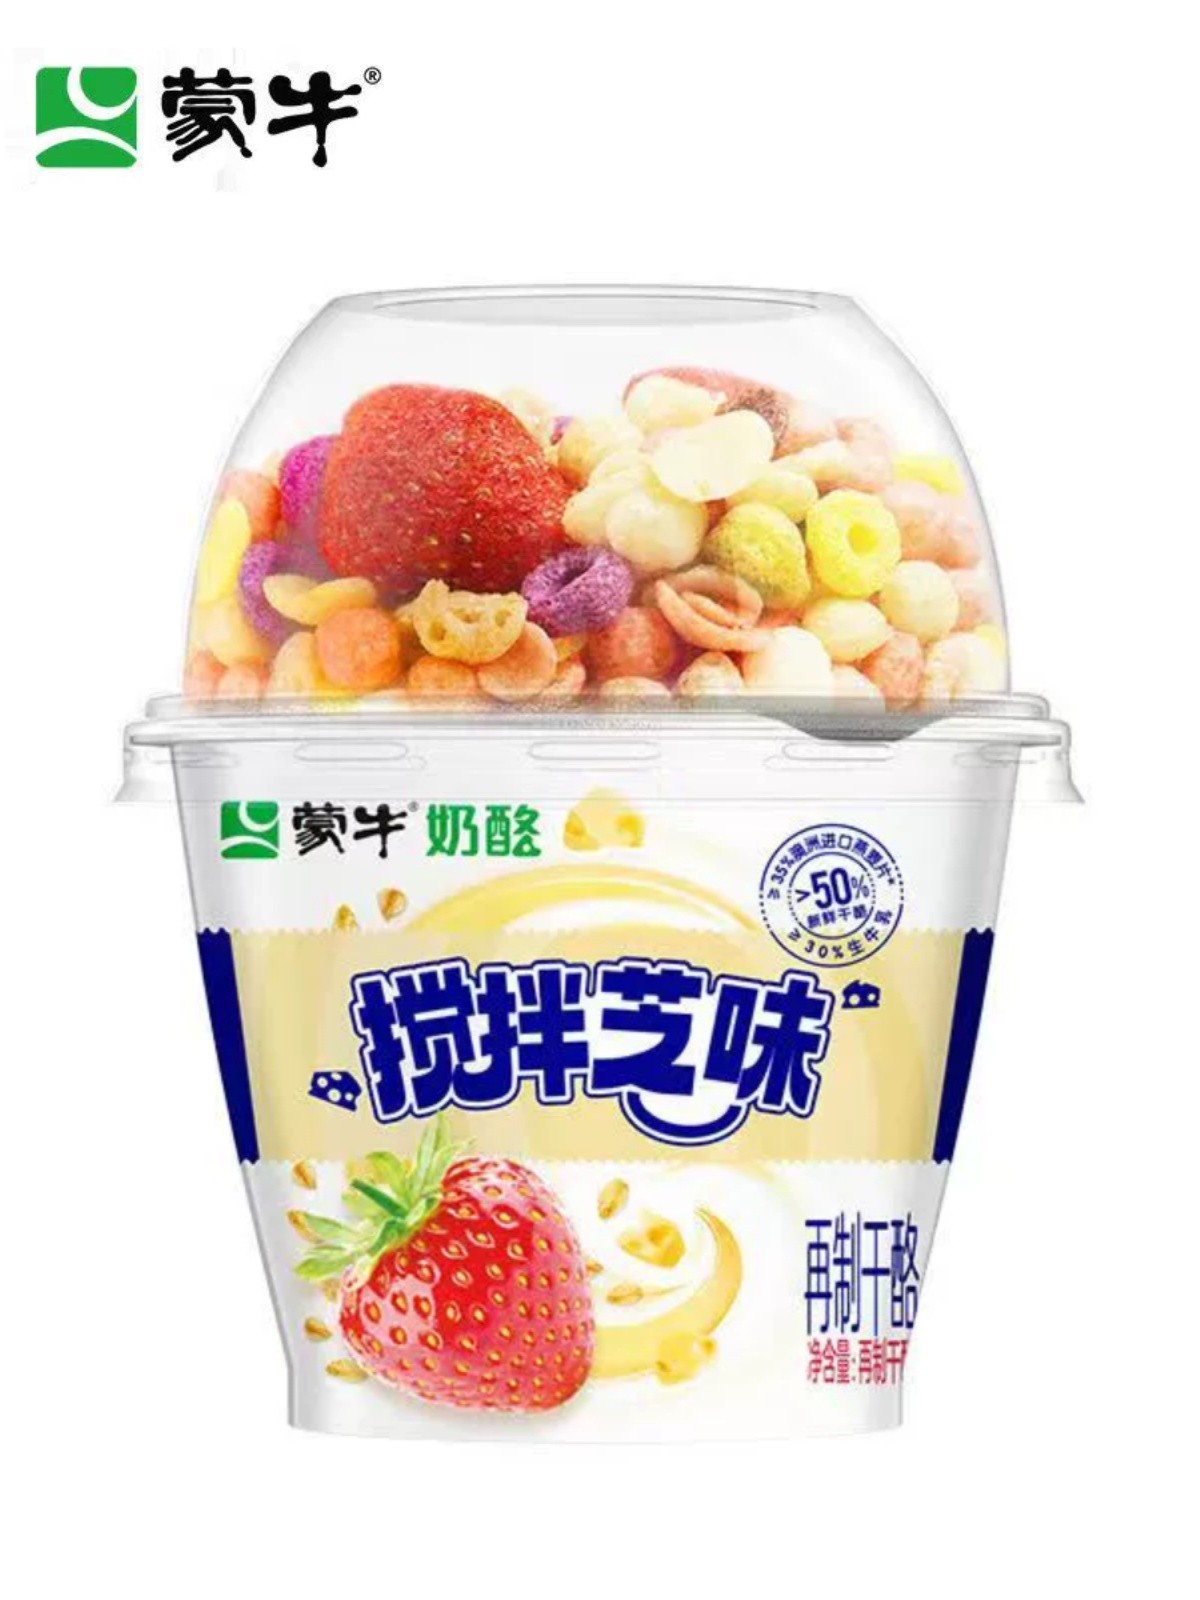 yogurt-strawberry-flavor